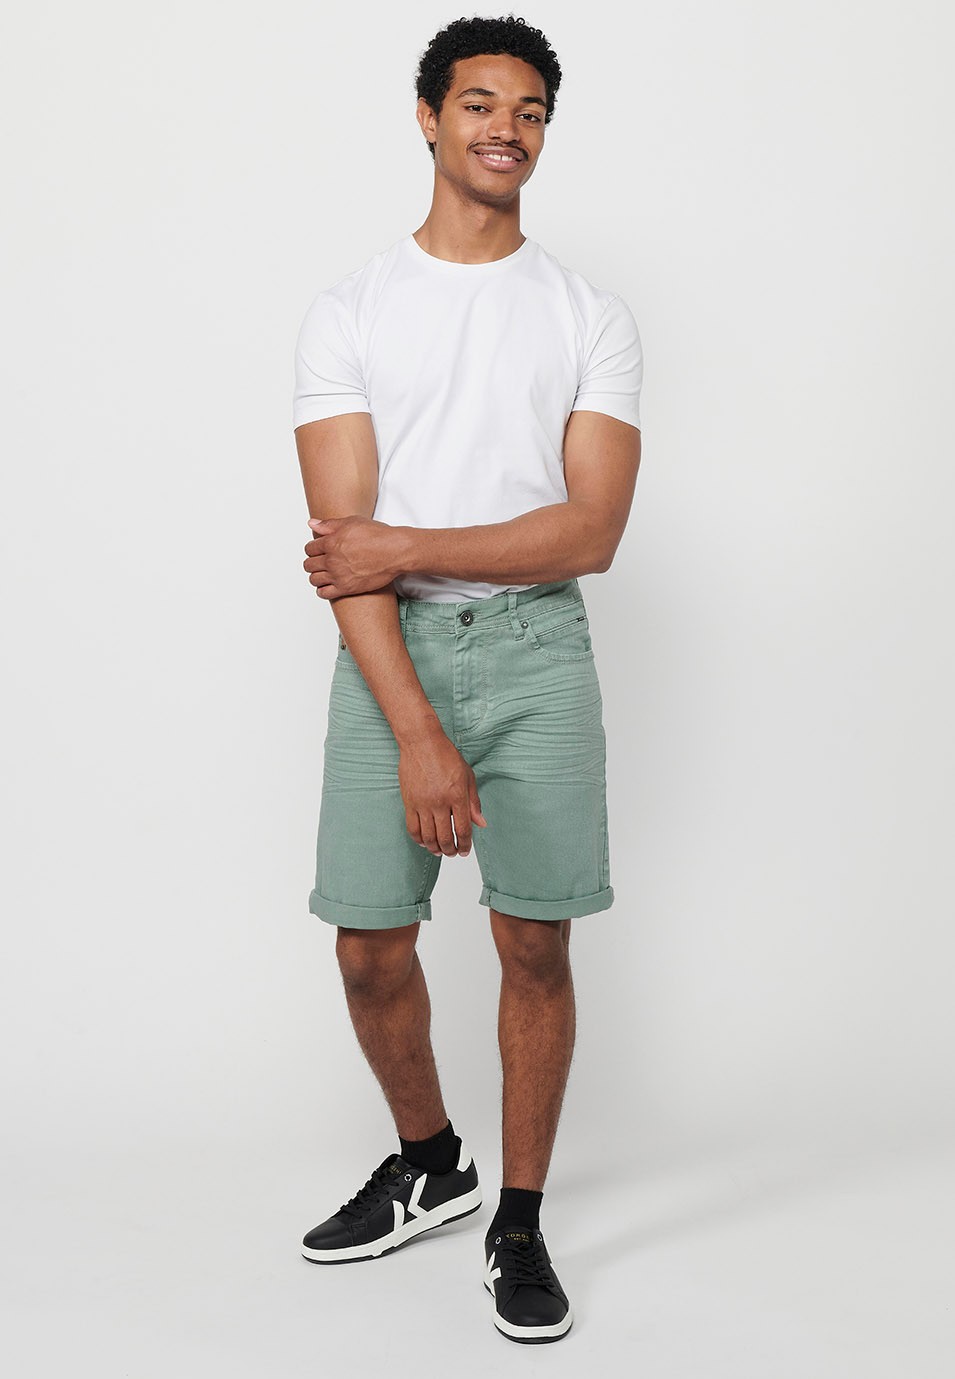 Shorts, five pockets, green color for men